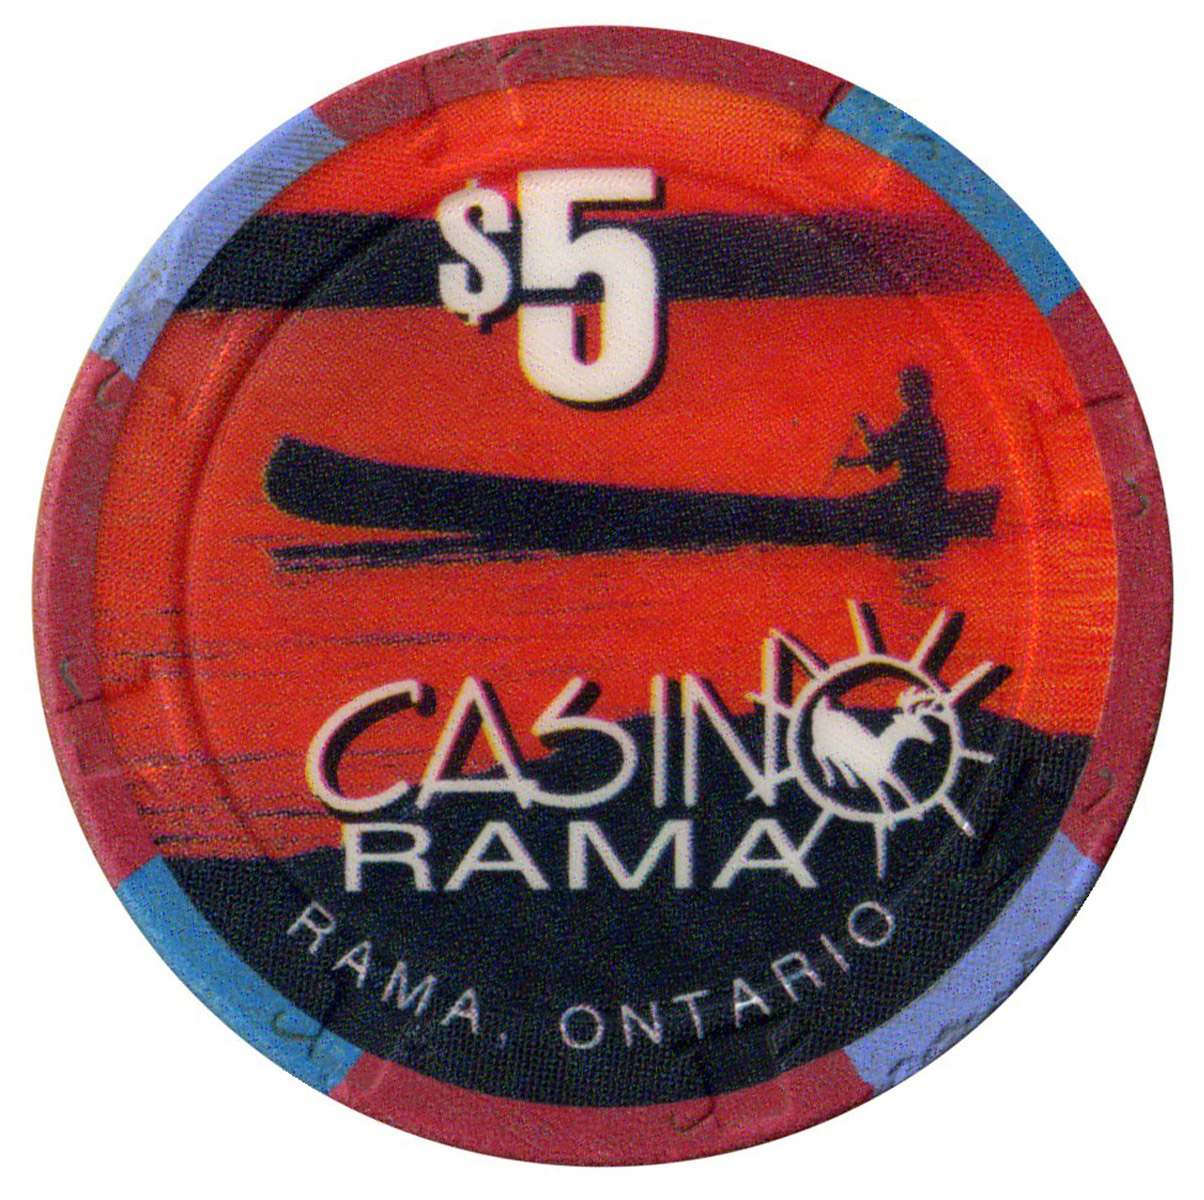 where is casino rama ontario